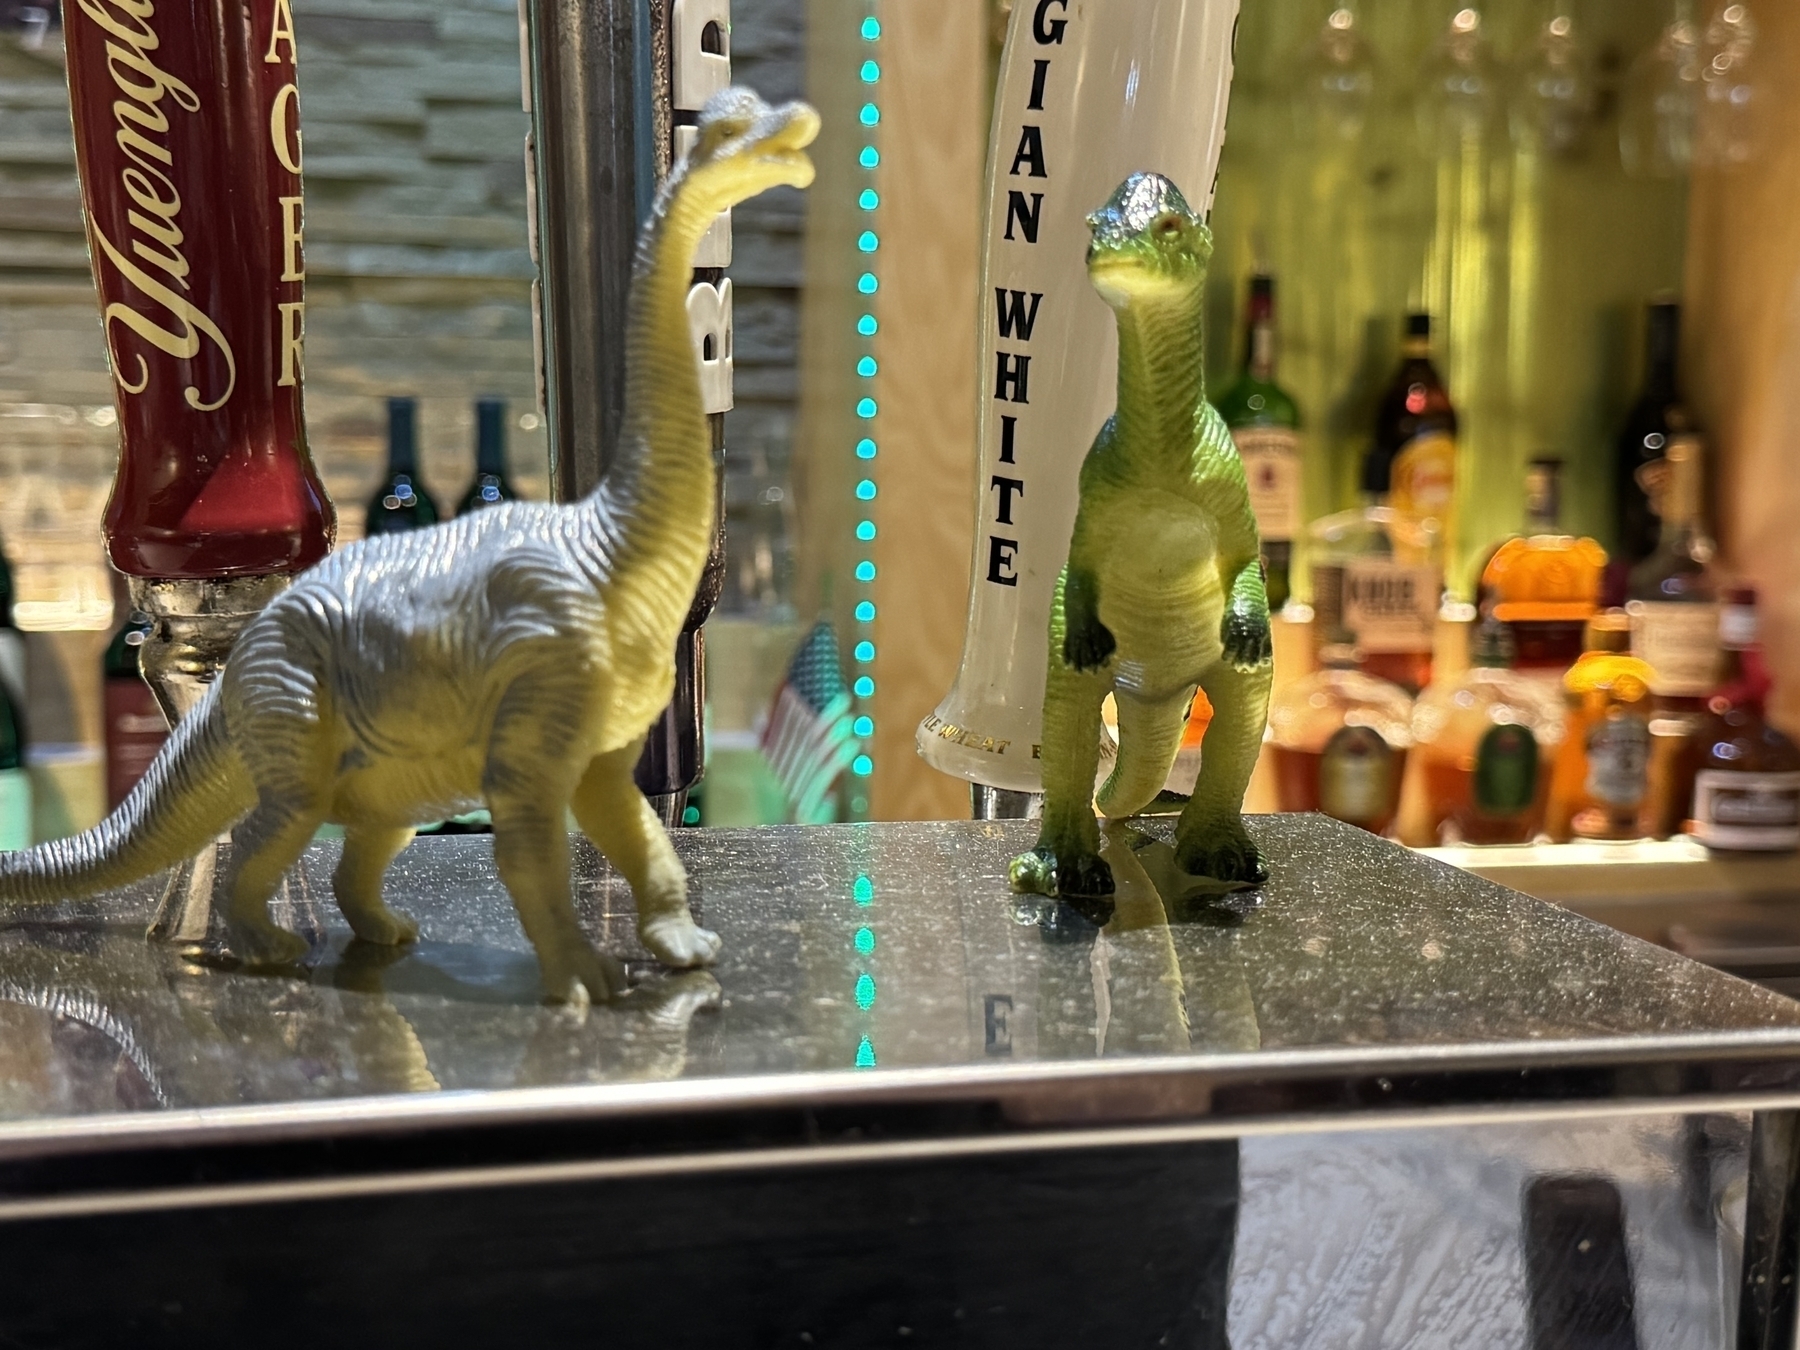 Dinosaur toys. 